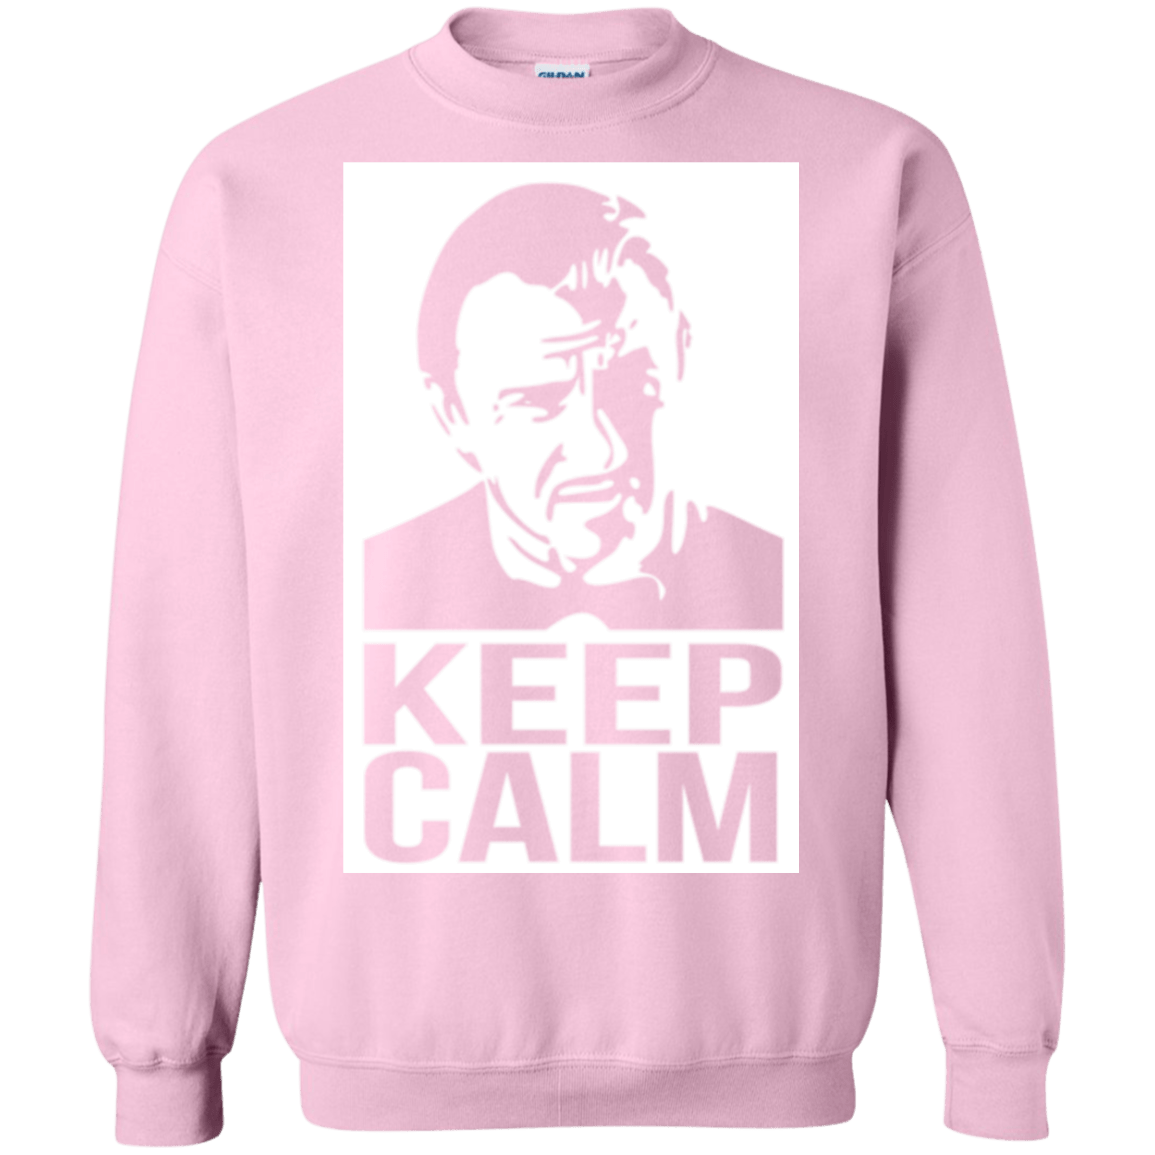 Sweatshirts Light Pink / Small Keep Calm Mr. Wolf Crewneck Sweatshirt